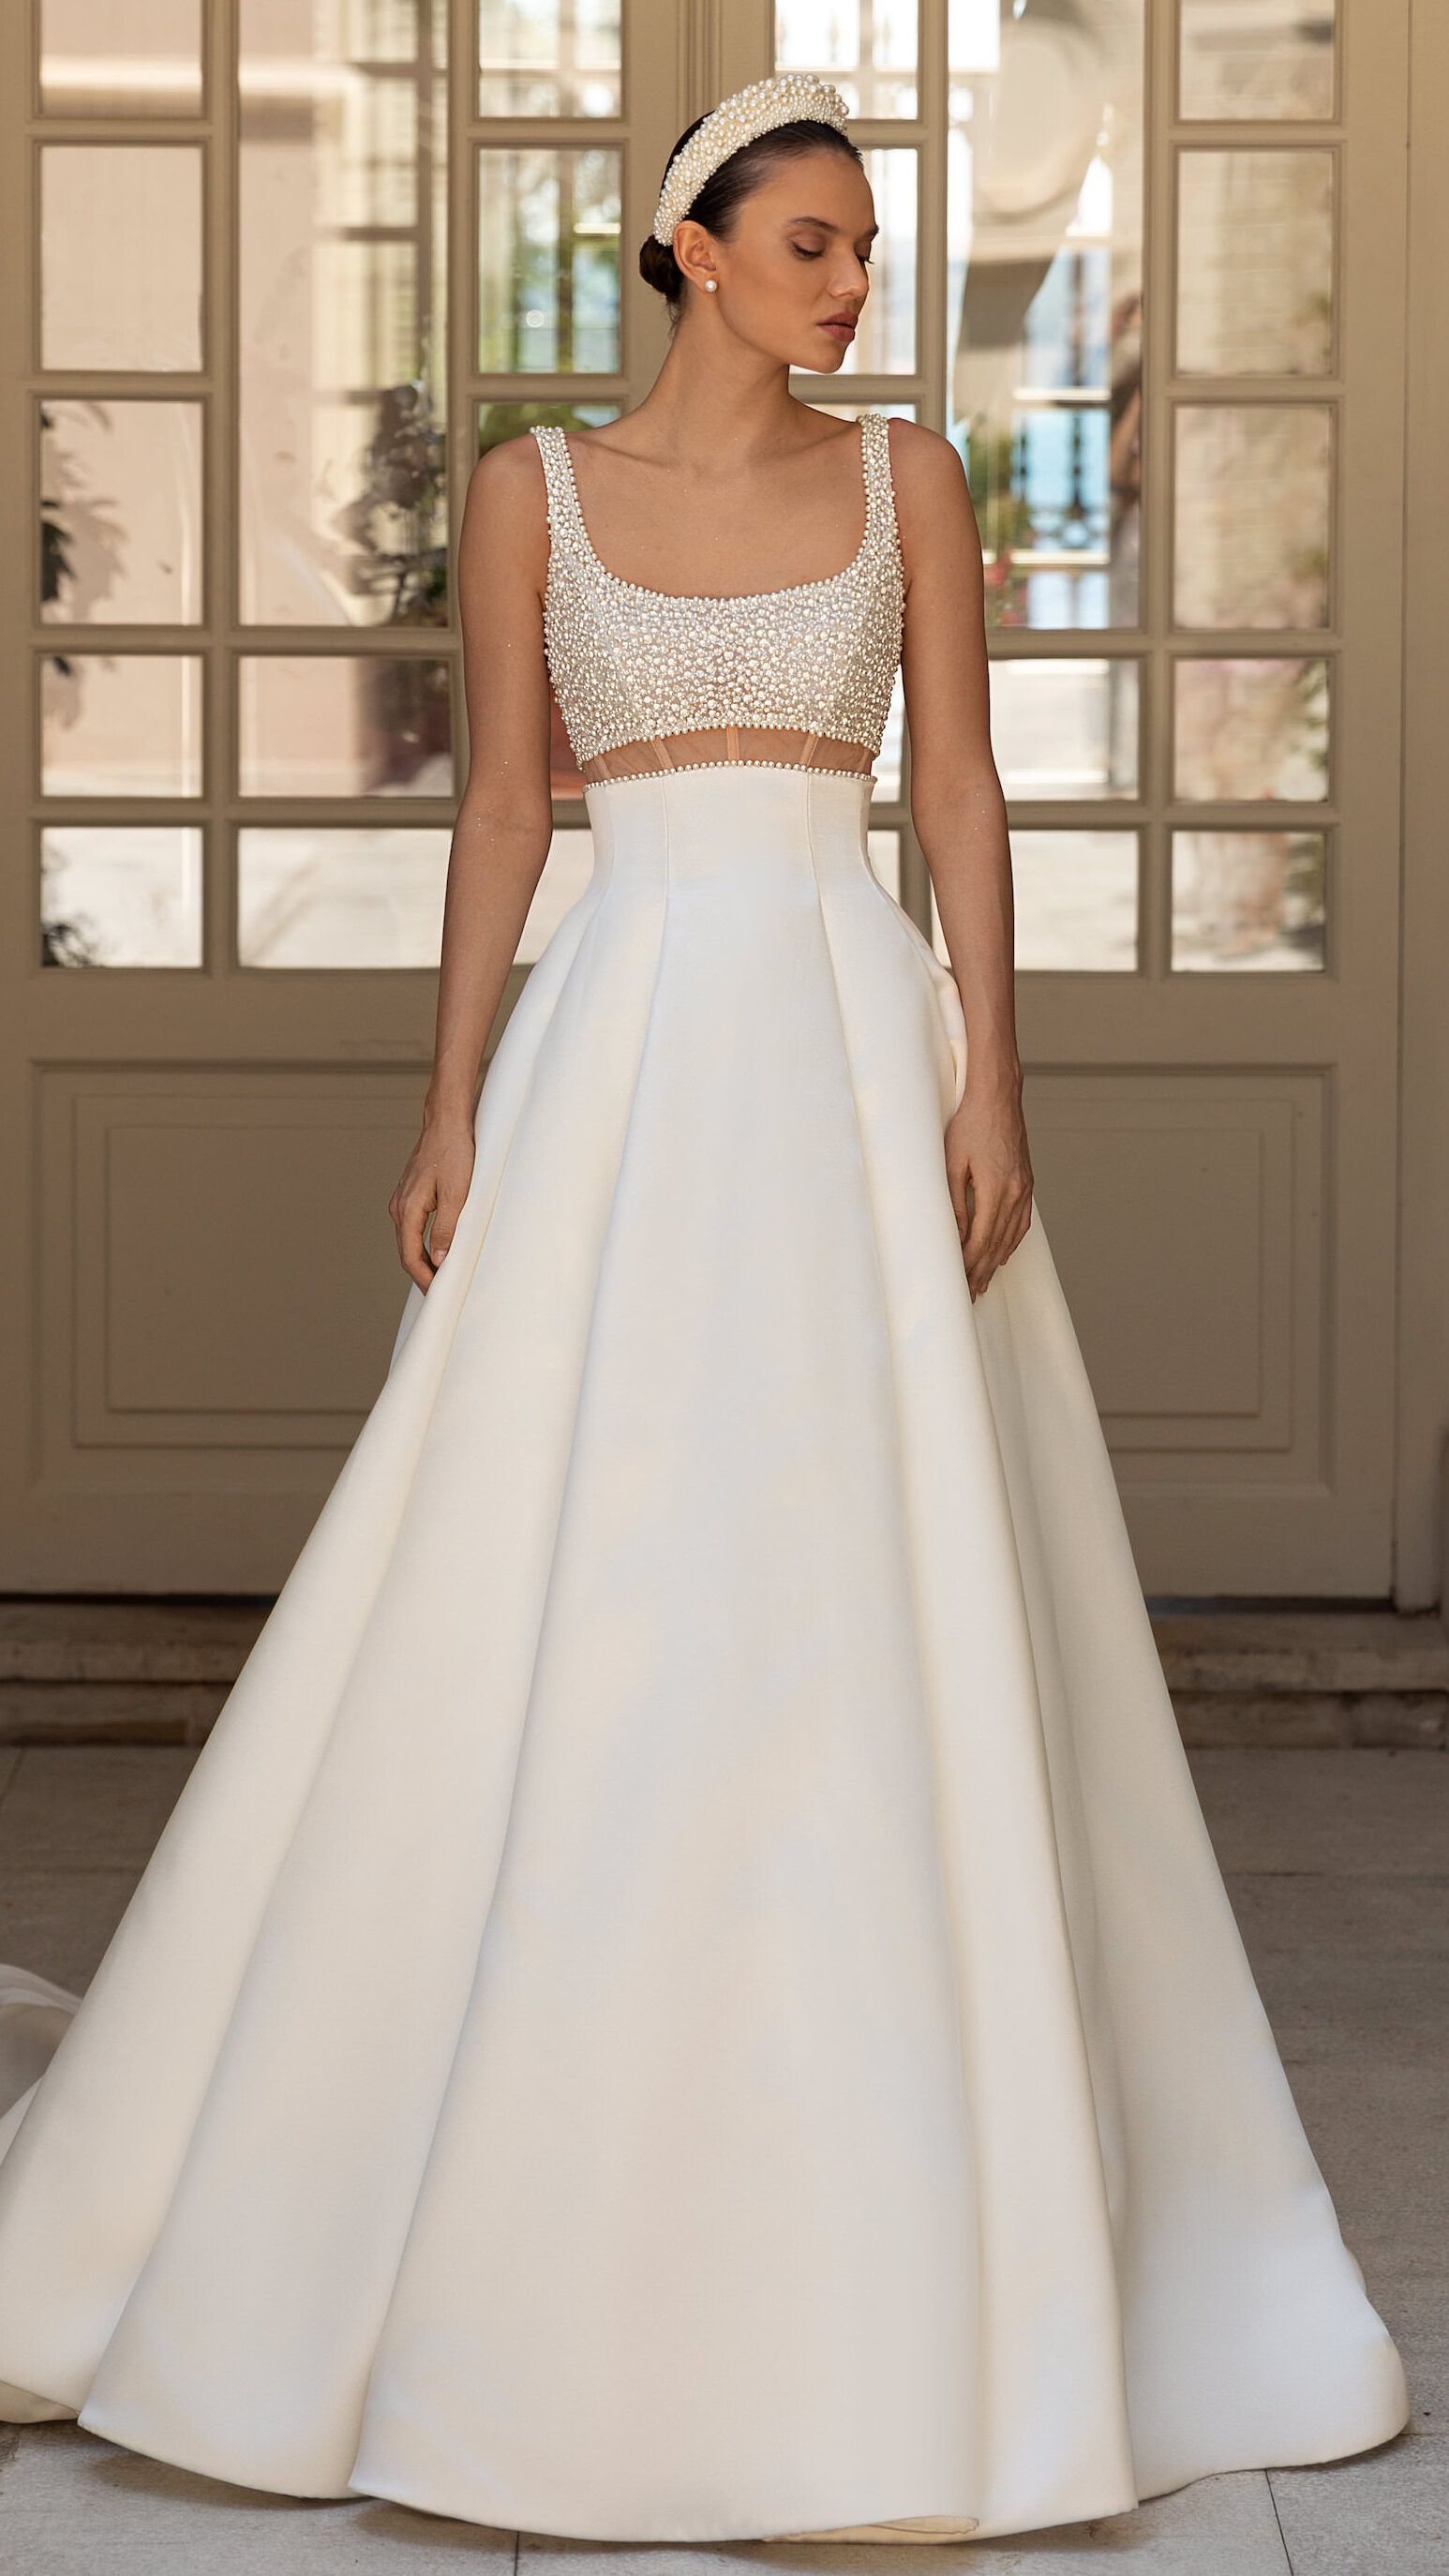 Ironiama by Ida Torez wedding dress - Top 2022 Bridal Trends Featuring Ukrainian Designers